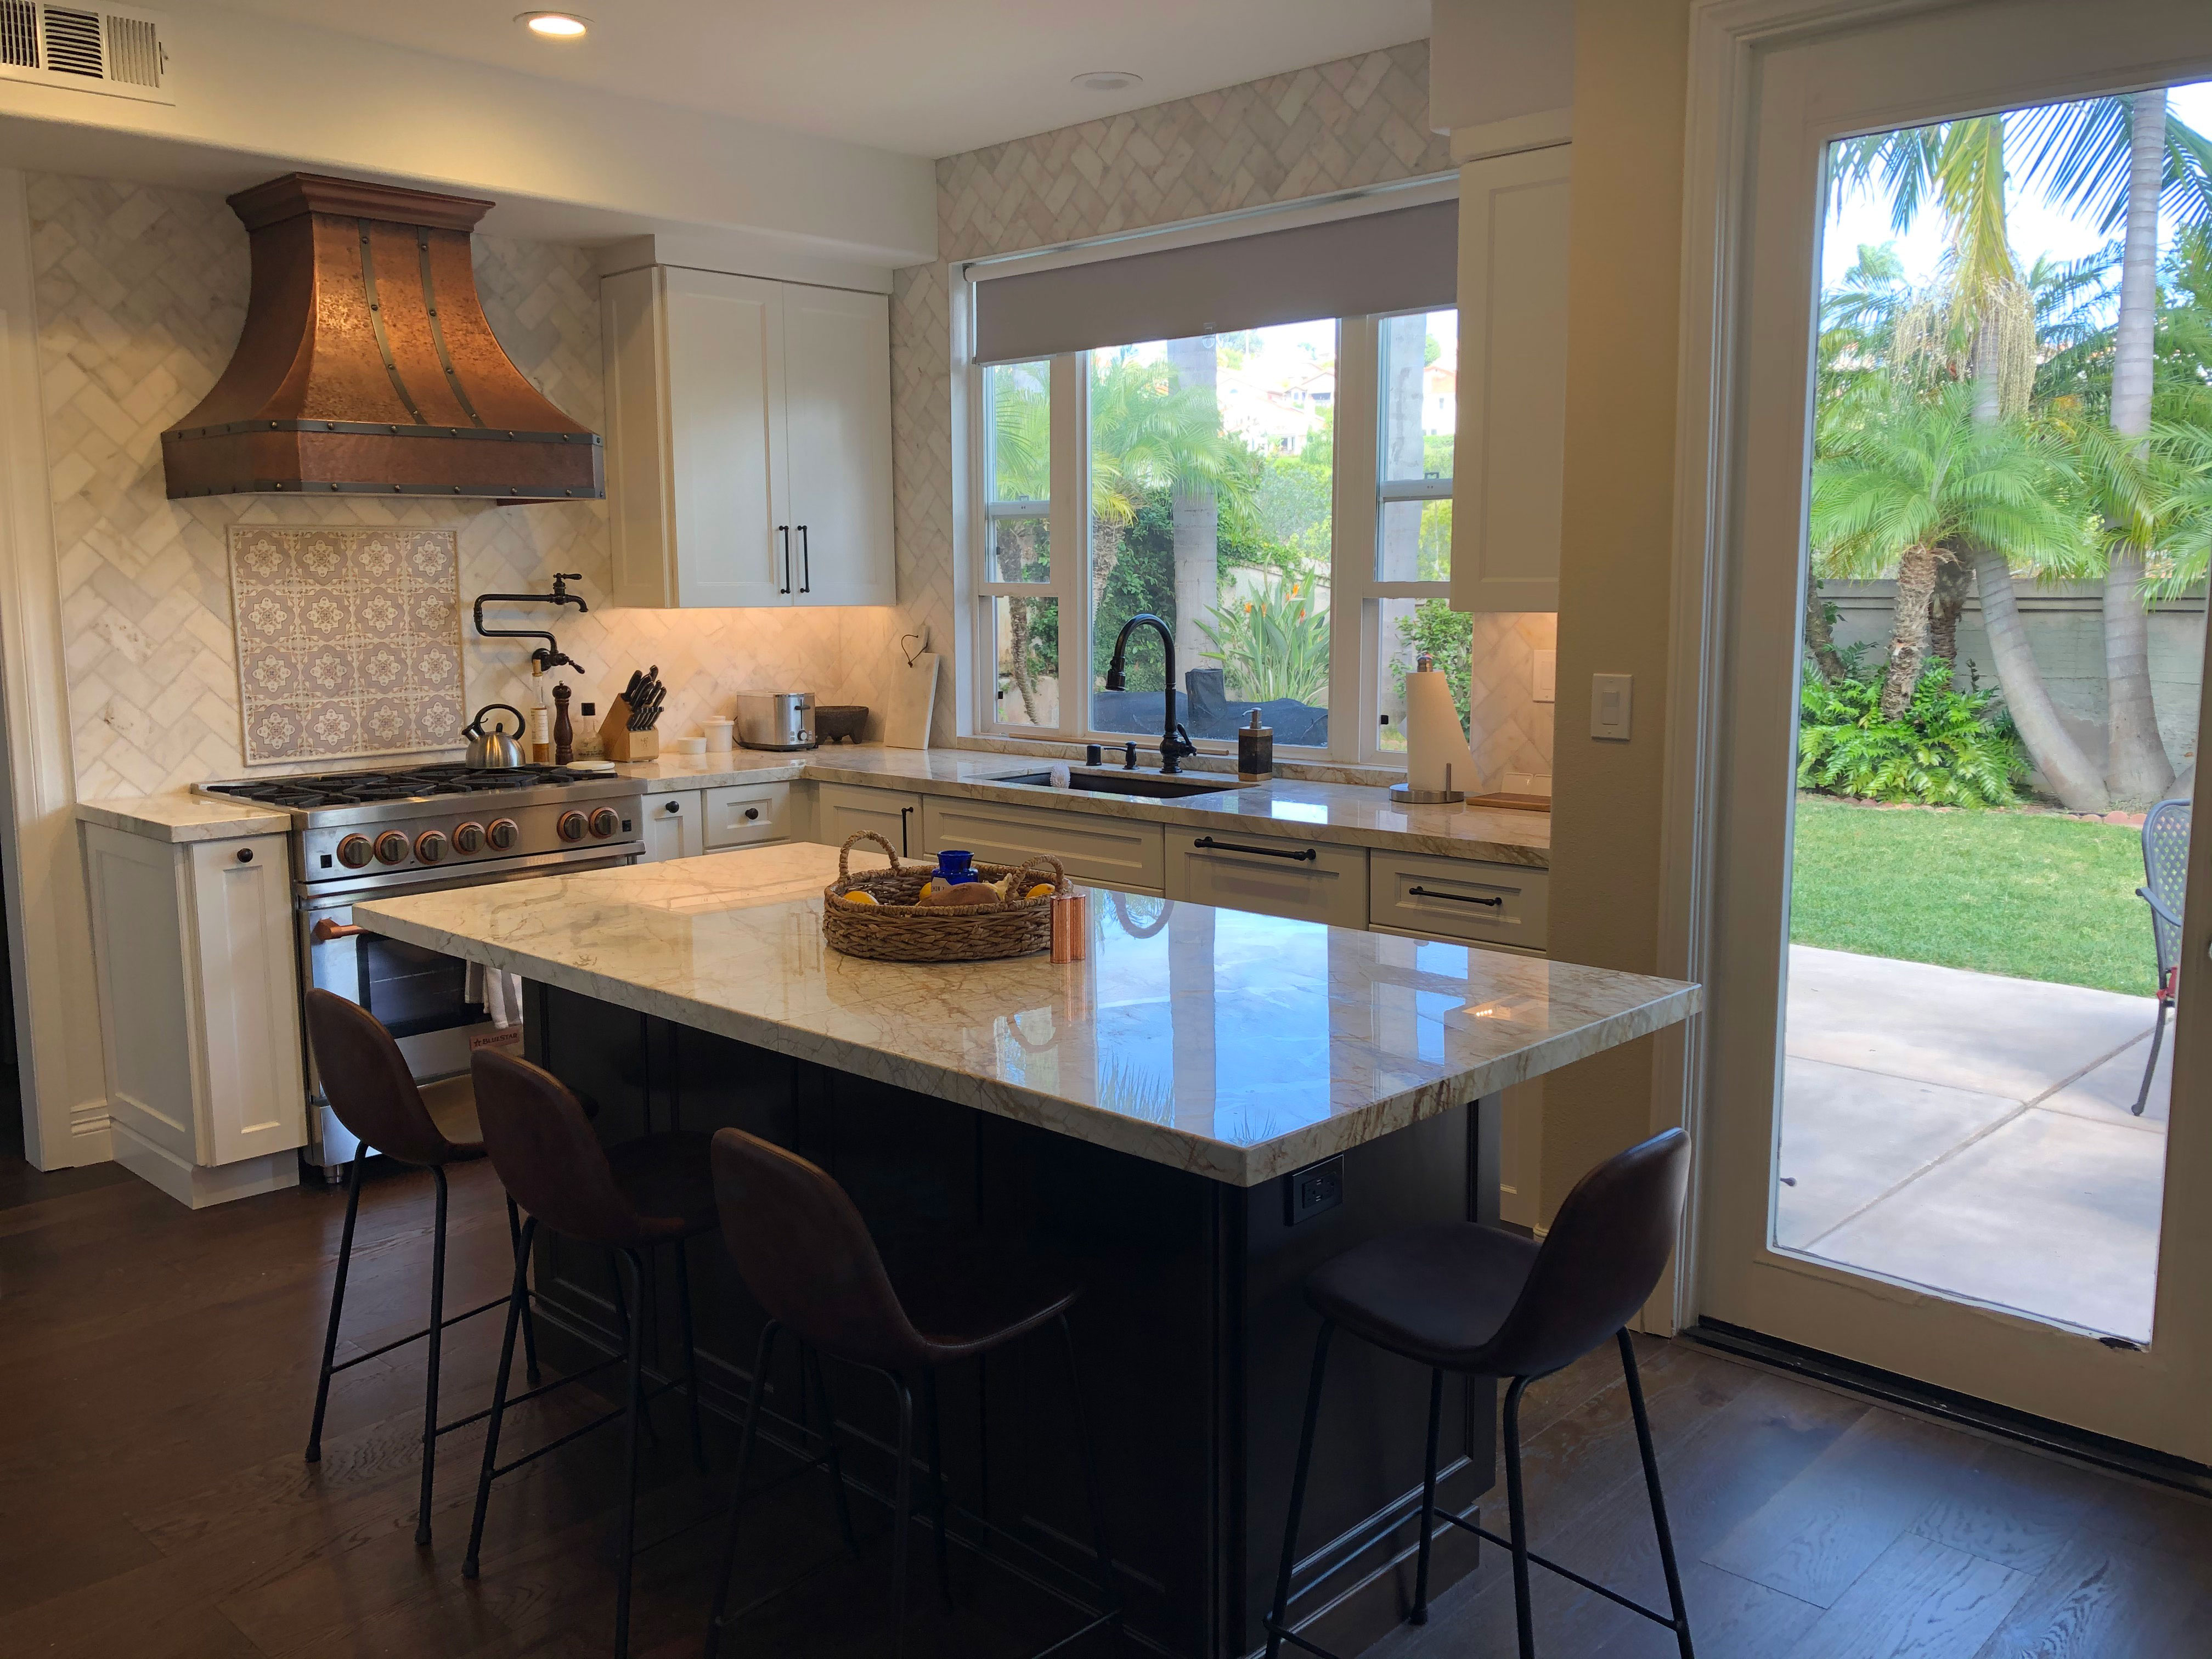 With brown kitchen cabinets brick backsplash, the french kitchen design is enhanced by white kitchen countertops stylish range hood